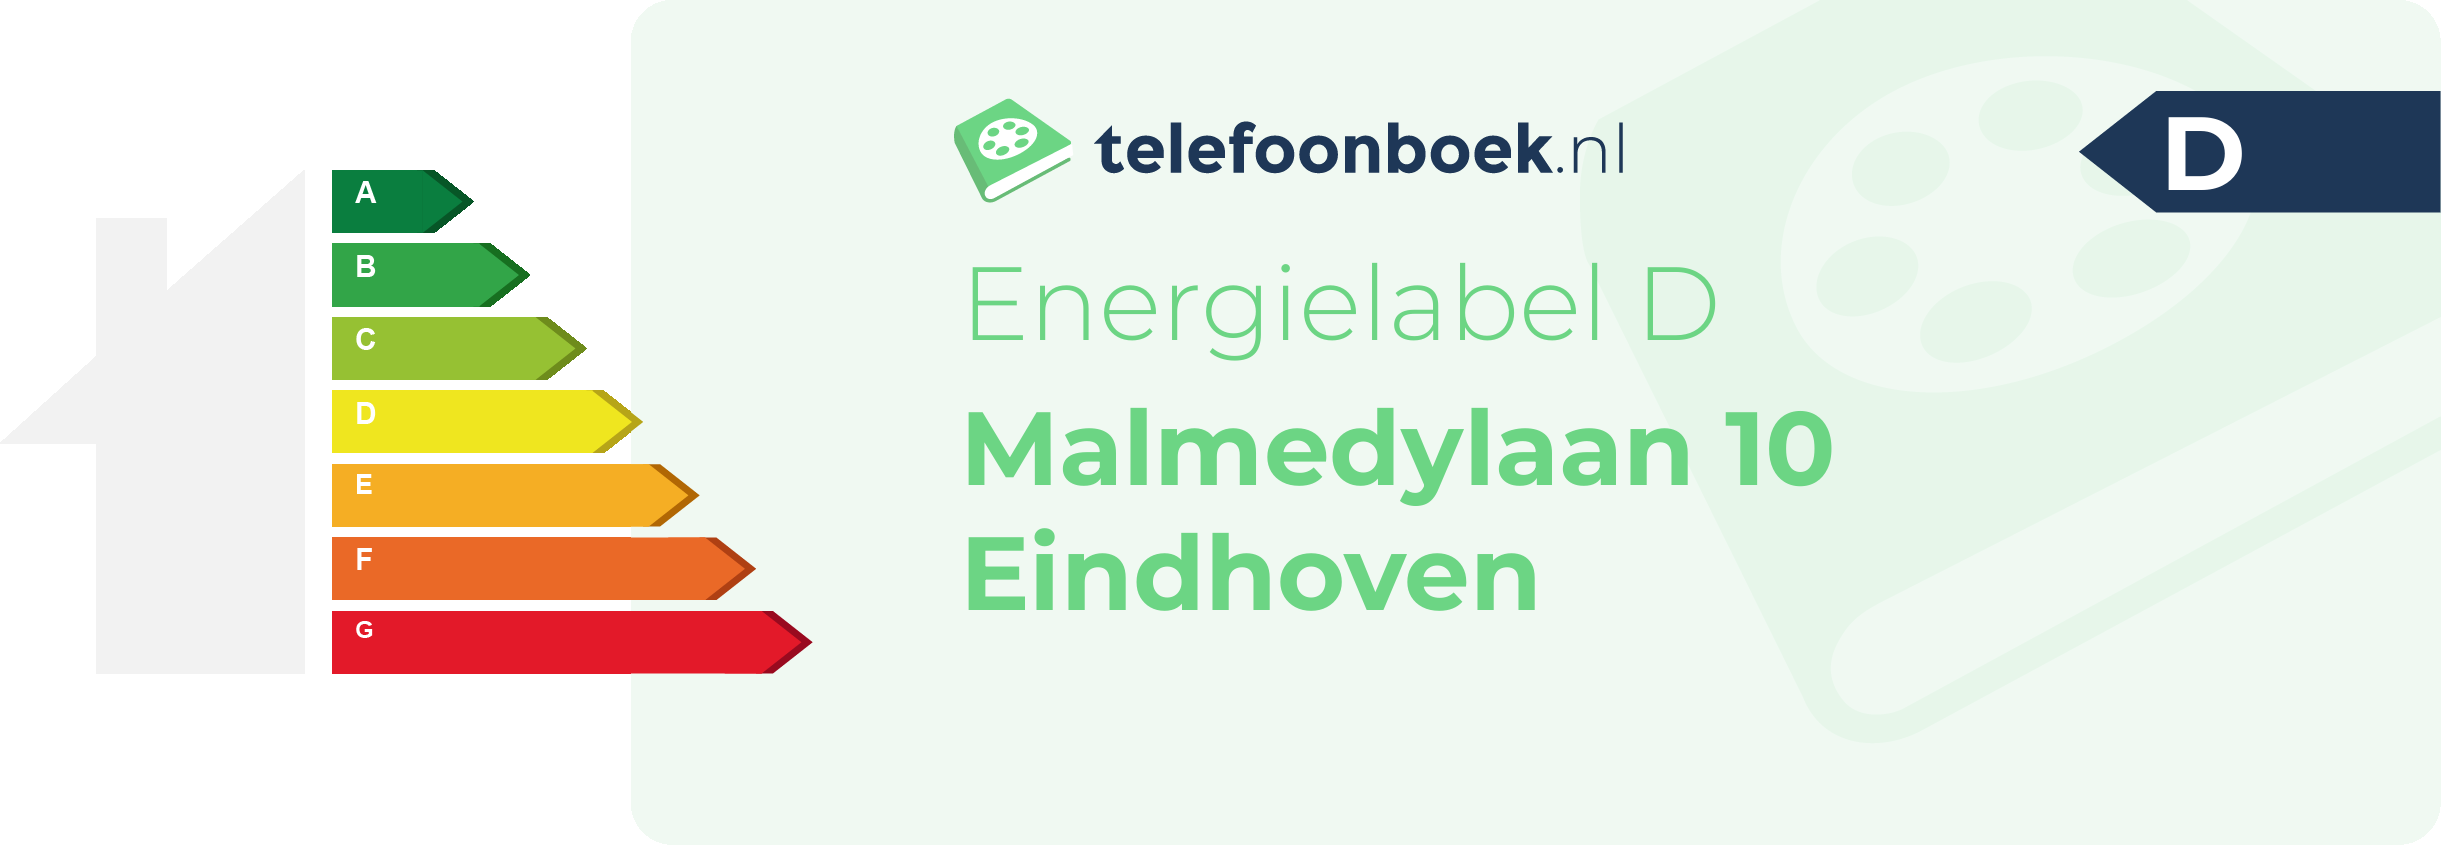 Energielabel Malmedylaan 10 Eindhoven